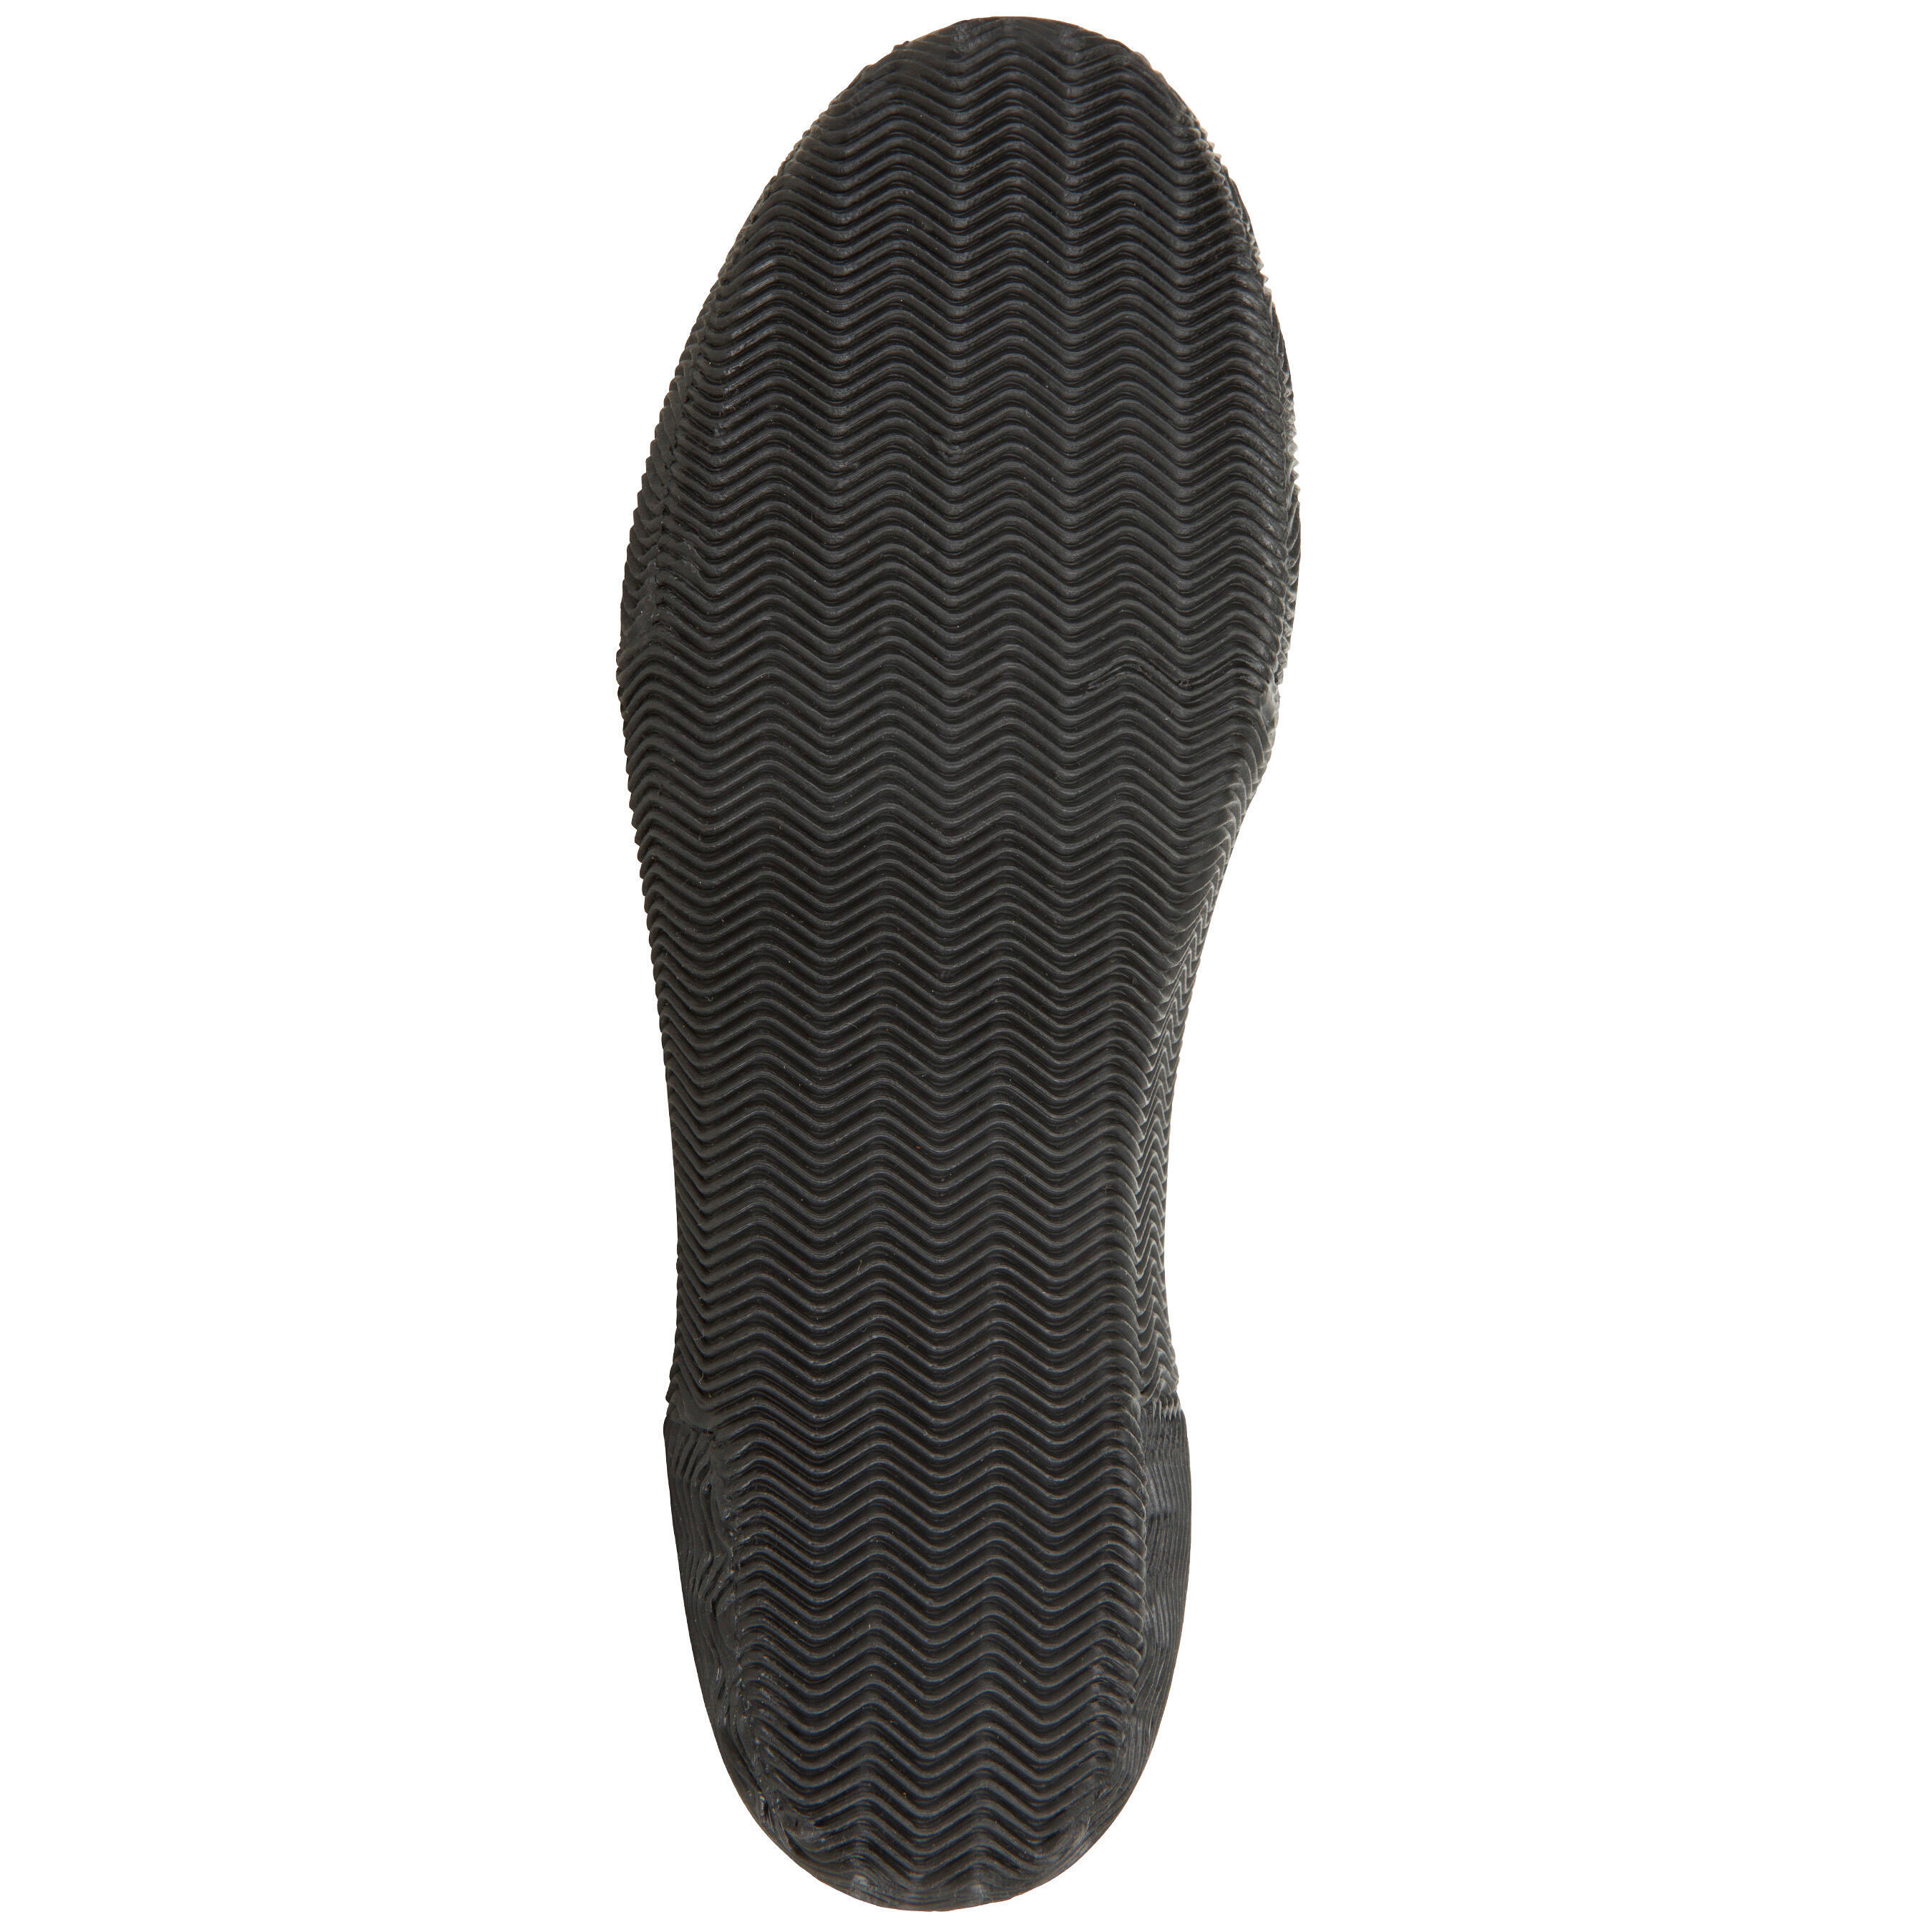 Kayak/SUP shoes in 1.5 mm neoprene ITIWIT | Decathlon